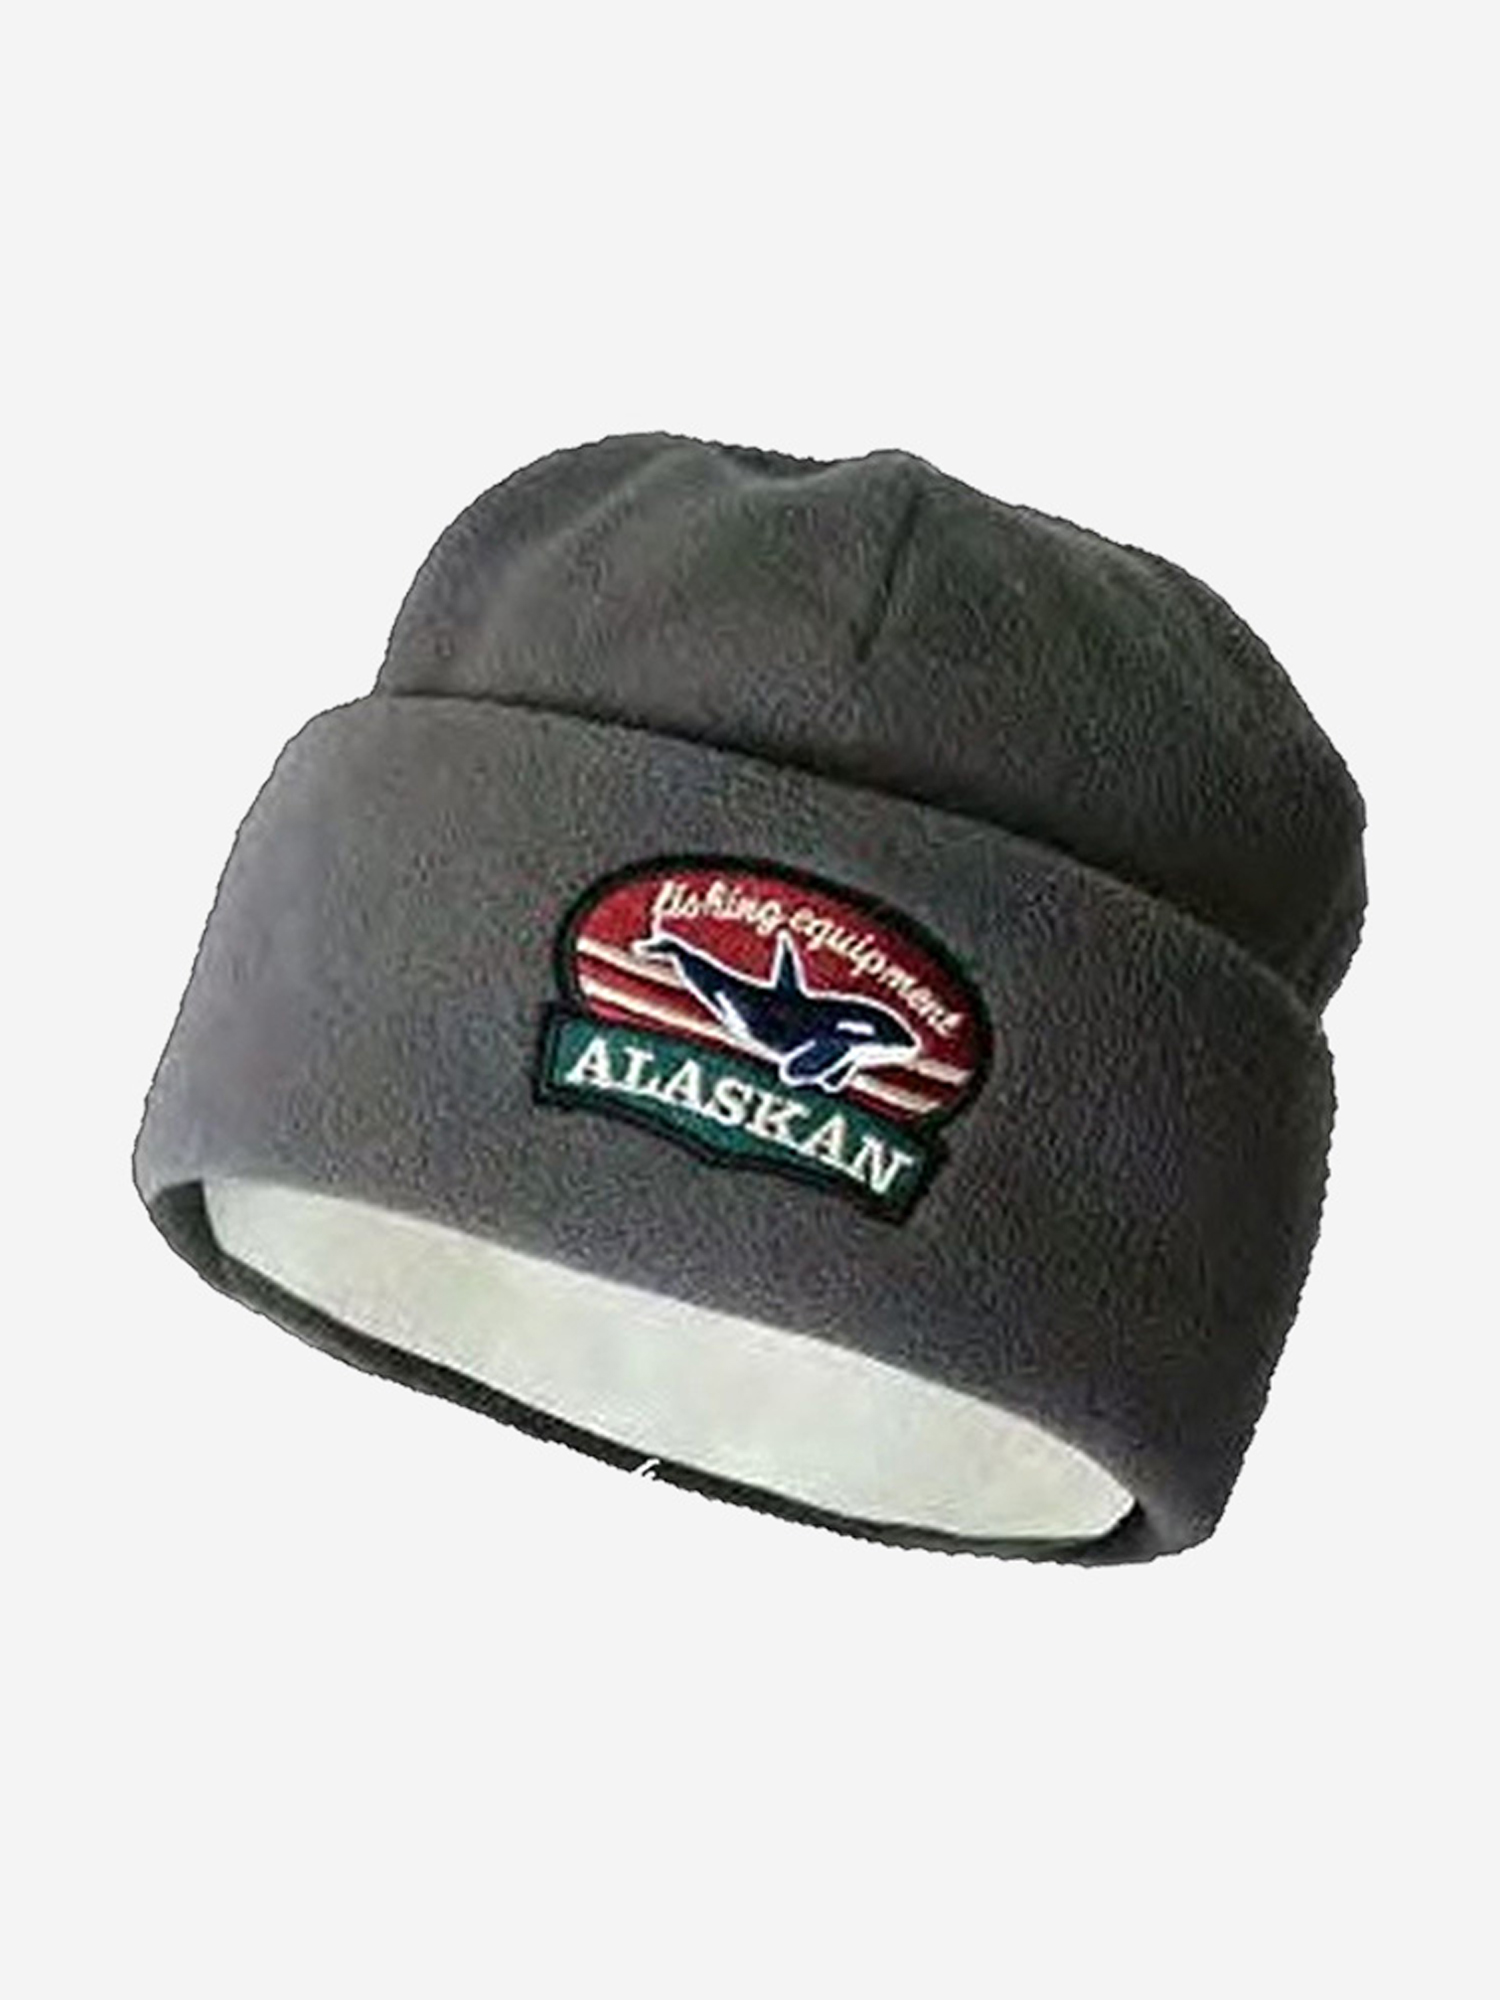 Шапка Alaskan флисовая Black Salmon серая (AWCBSG), Серый шапка alaskan флисовая black salmon серая awcbsg серый